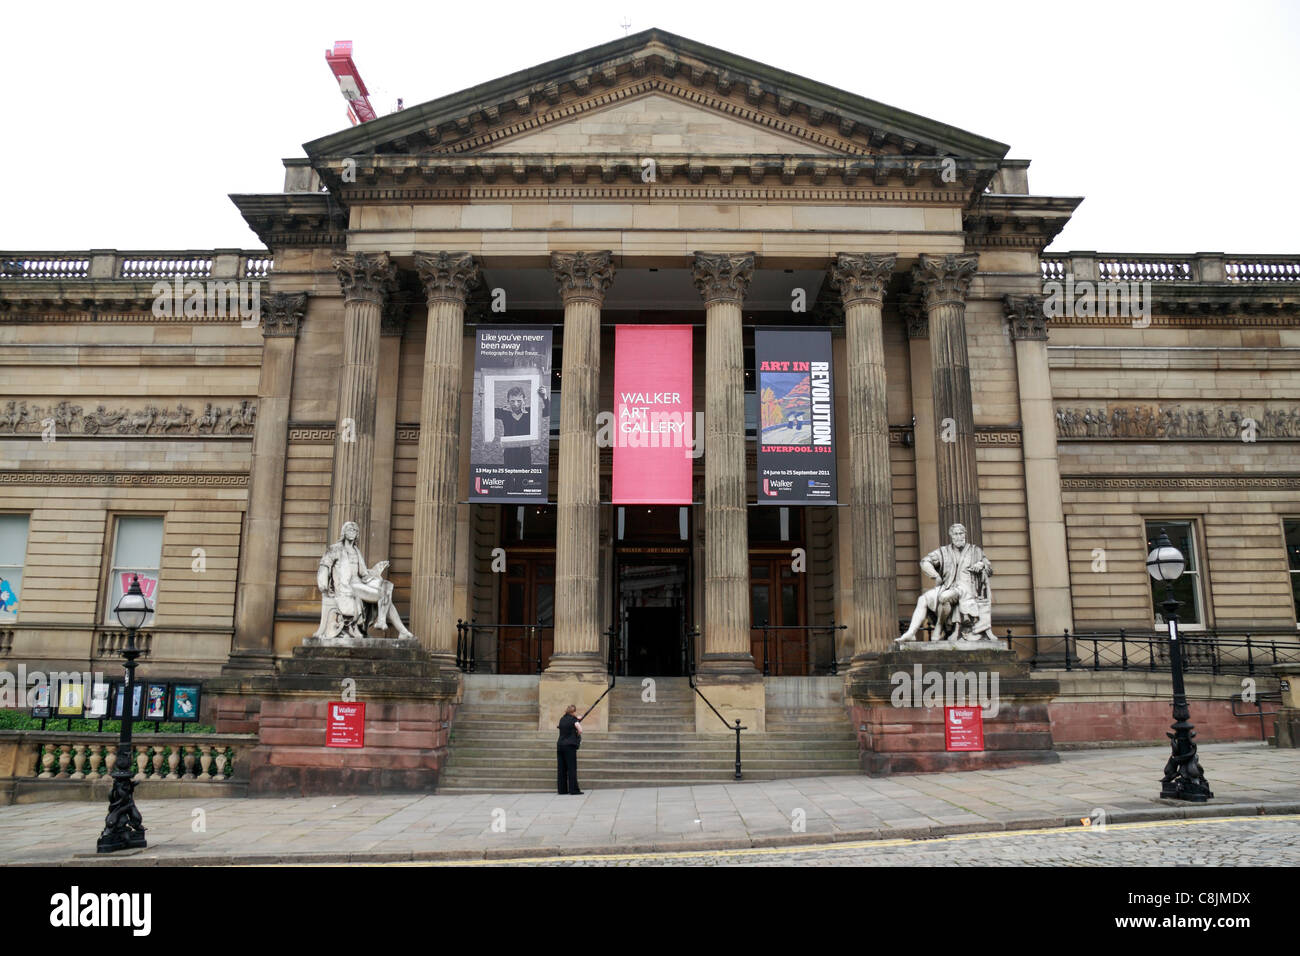 Der Haupteingang der Walker Art Gallery, Liverpool, UK. Stockfoto